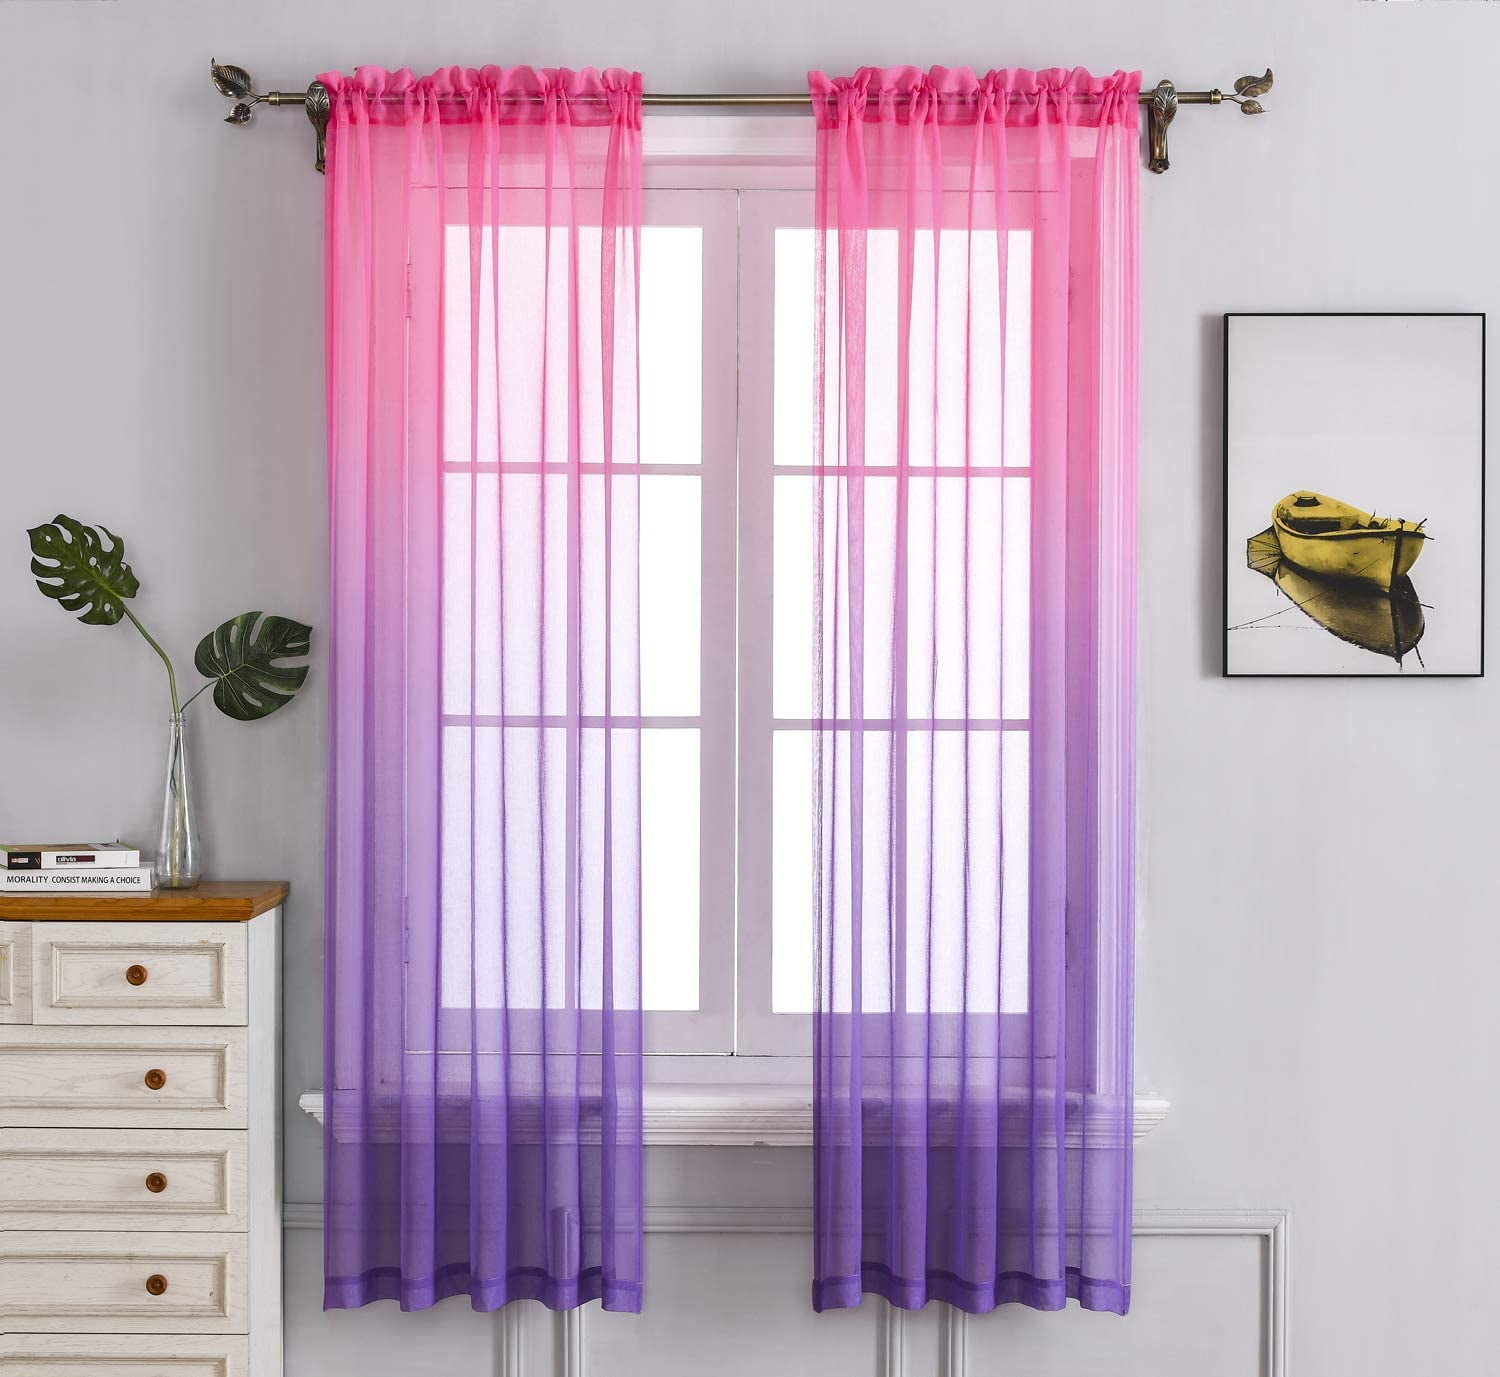 Voile Sheer Curtain Customise Bedroom Window Home Diy Children Kids Room Drape 